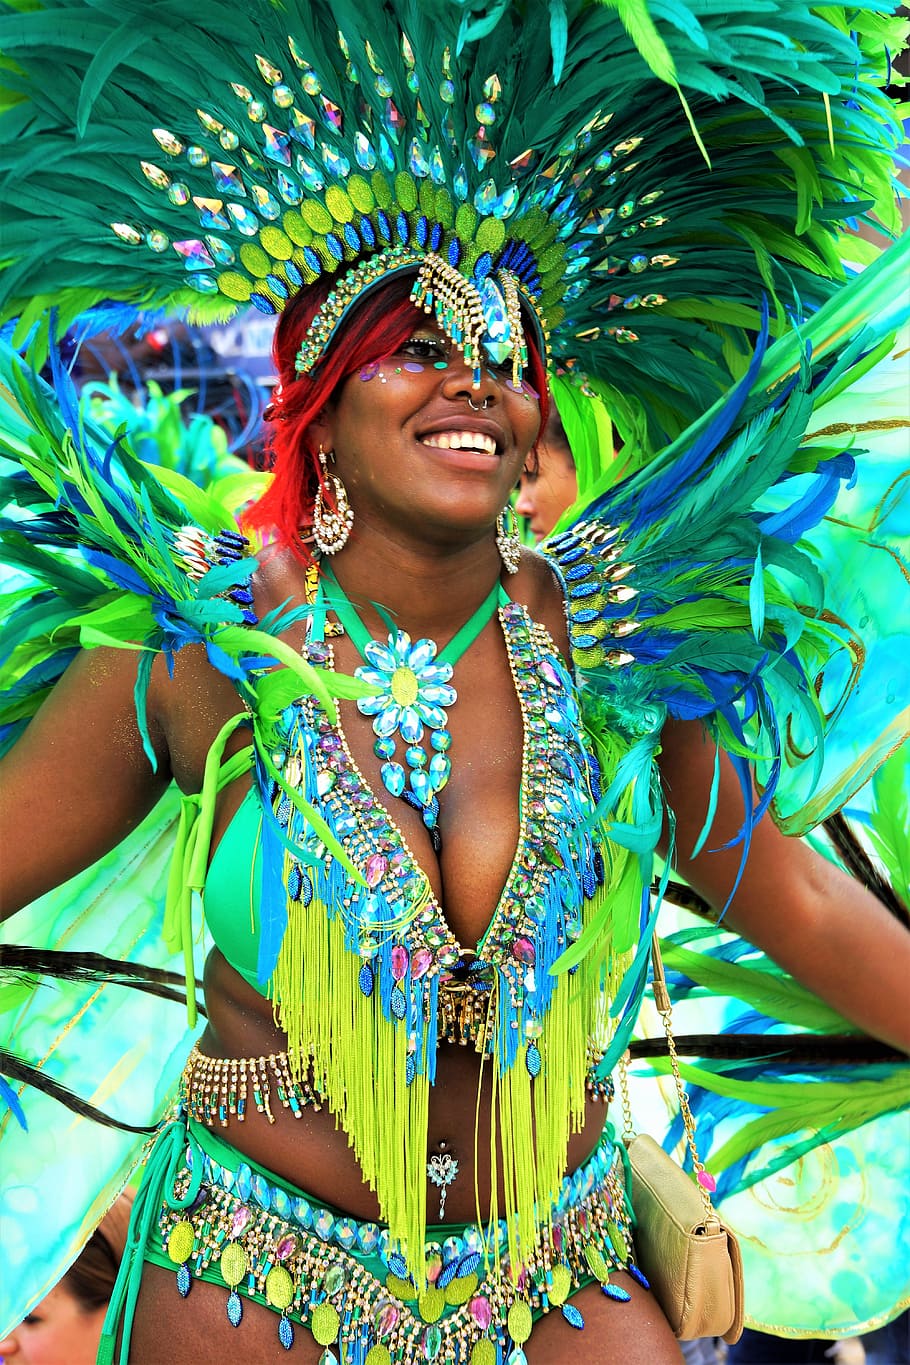 carnaval, sombrerería, disfraz, festival, notting hill, intérprete, desfile, baile, londres, ropa tradicional